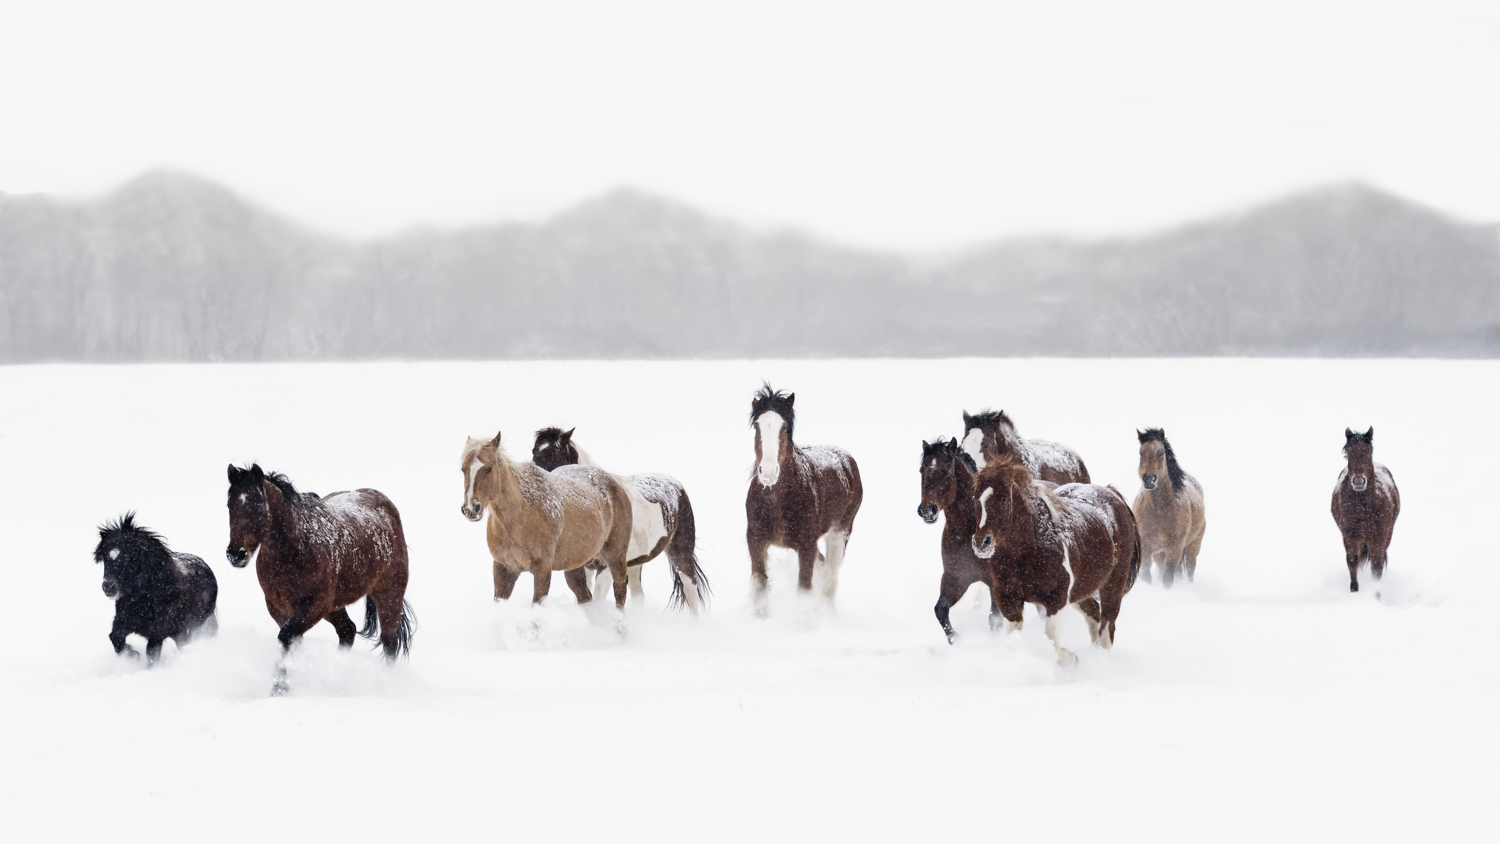 Snowy_Horses_cover.jpg